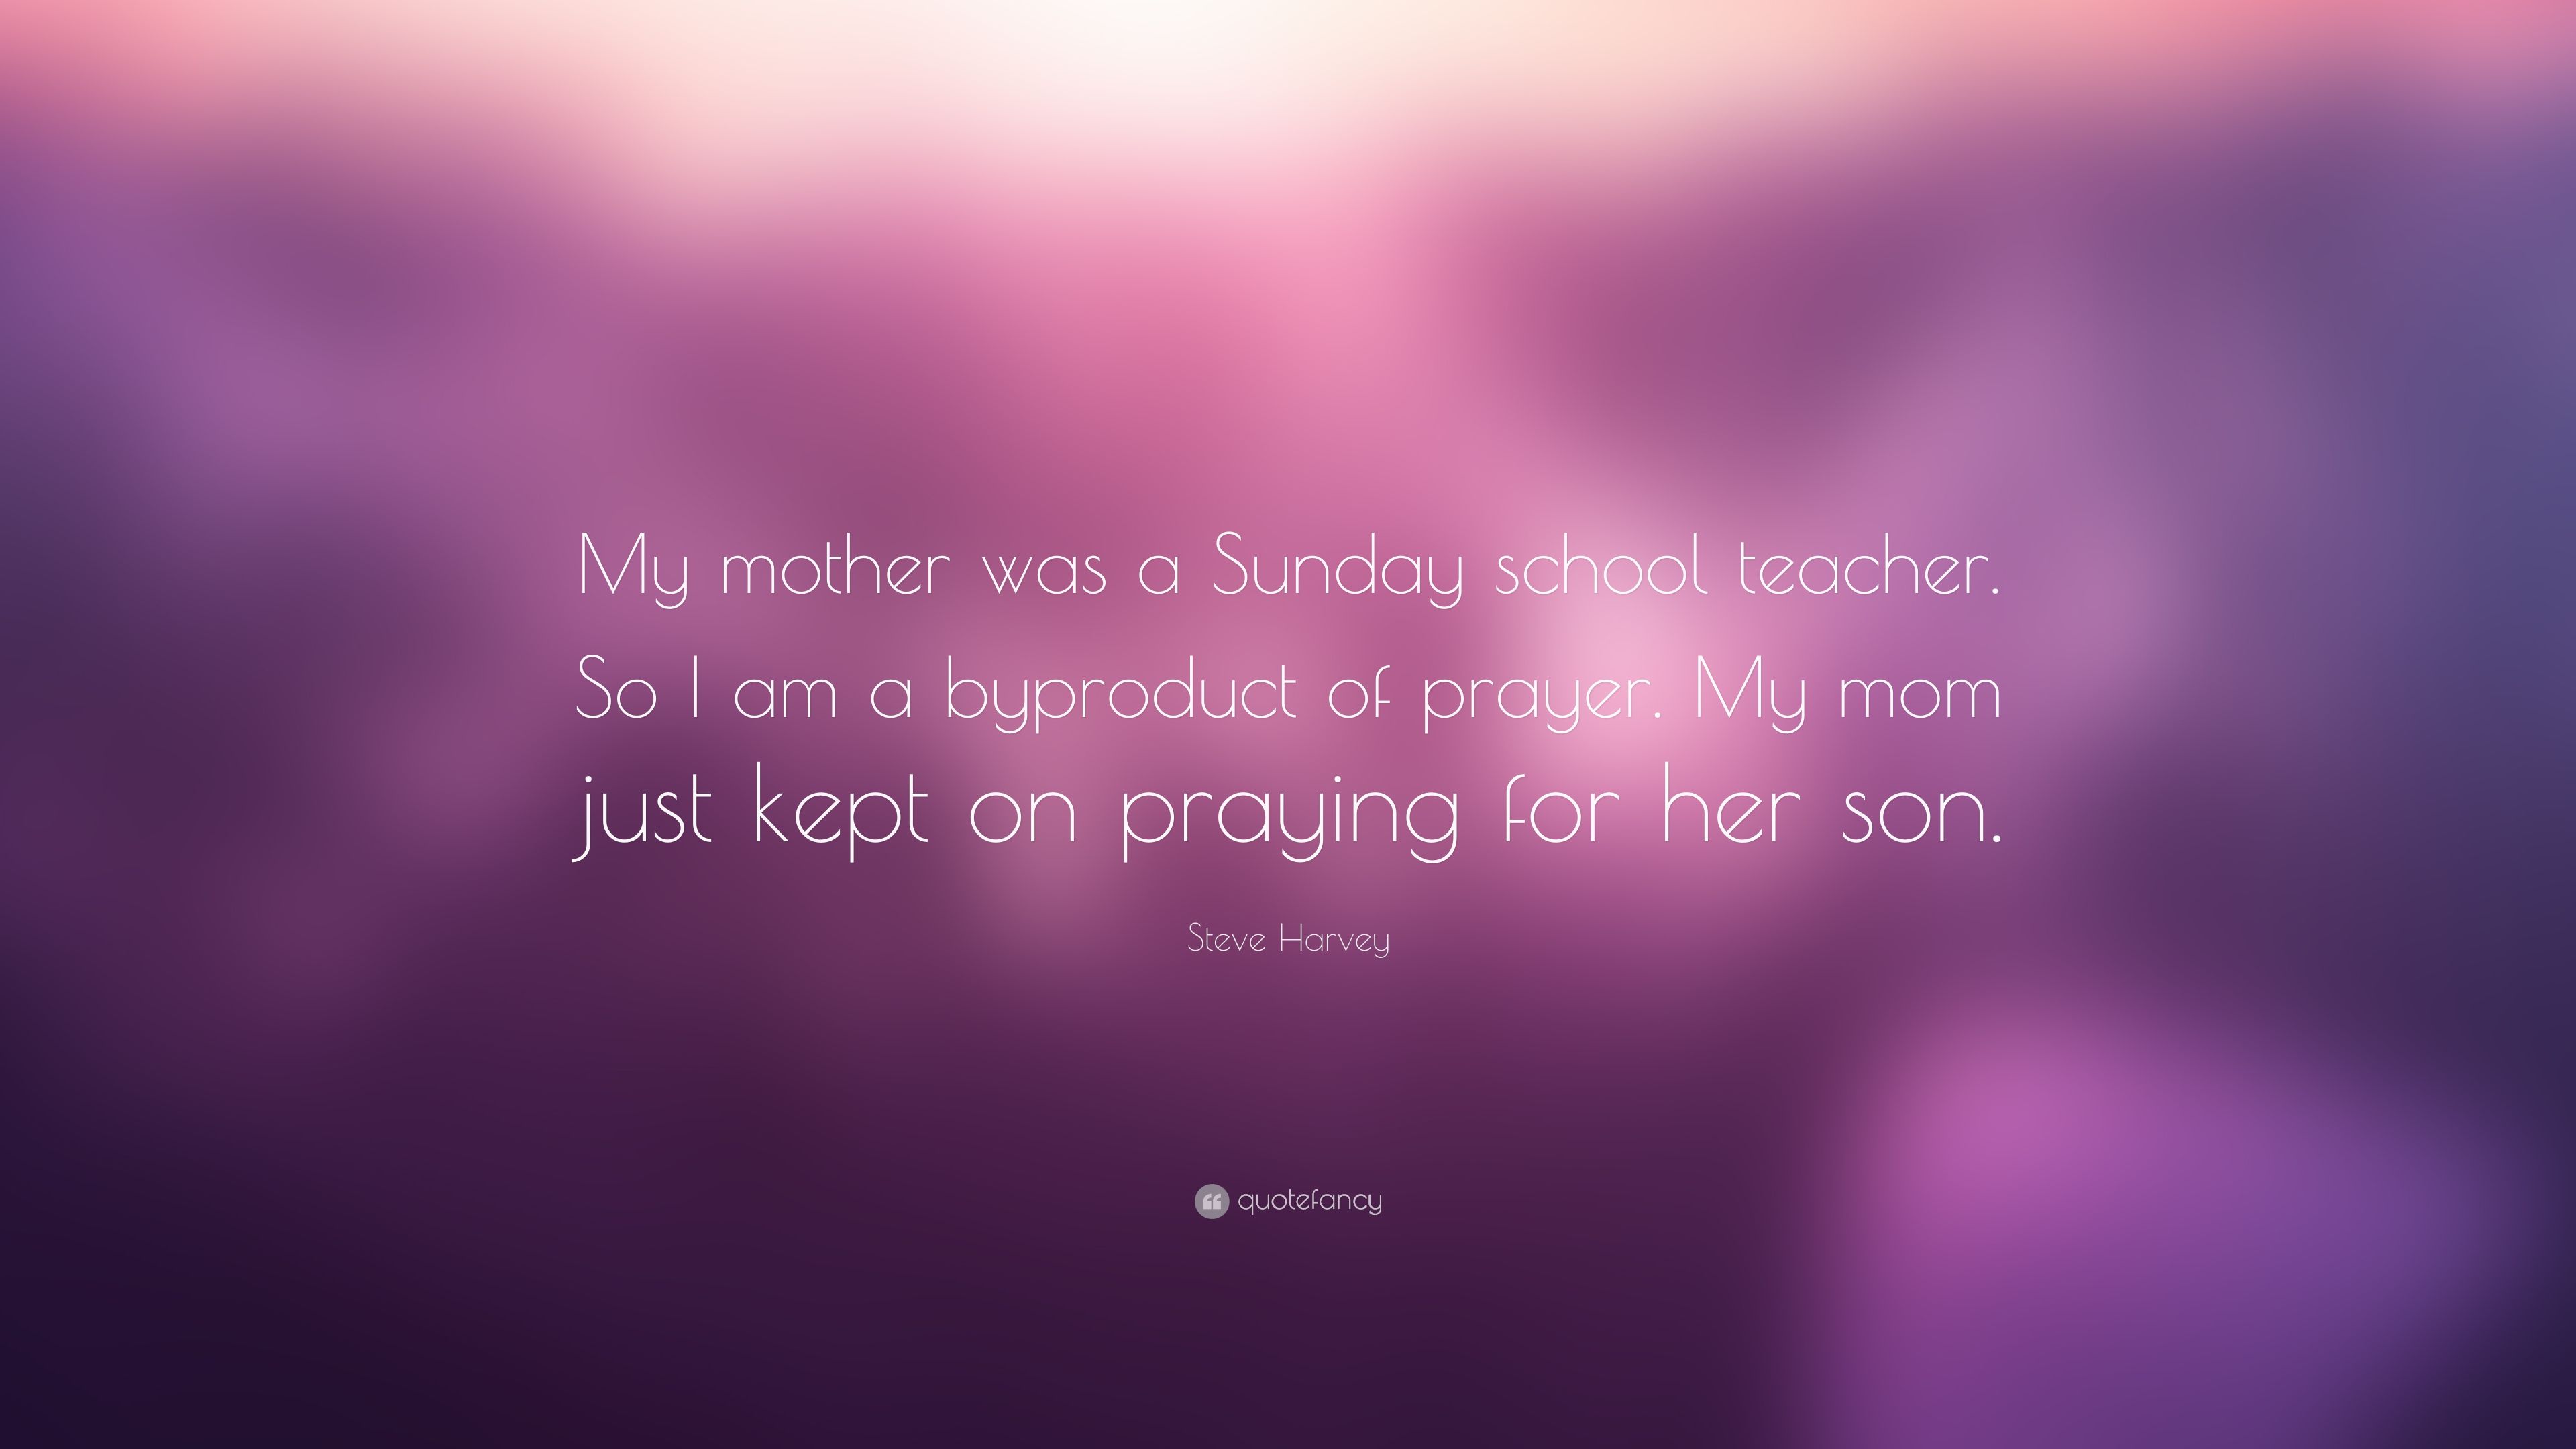 Steve Harvey Quote: “My mother was a Sunday school teacher. So I